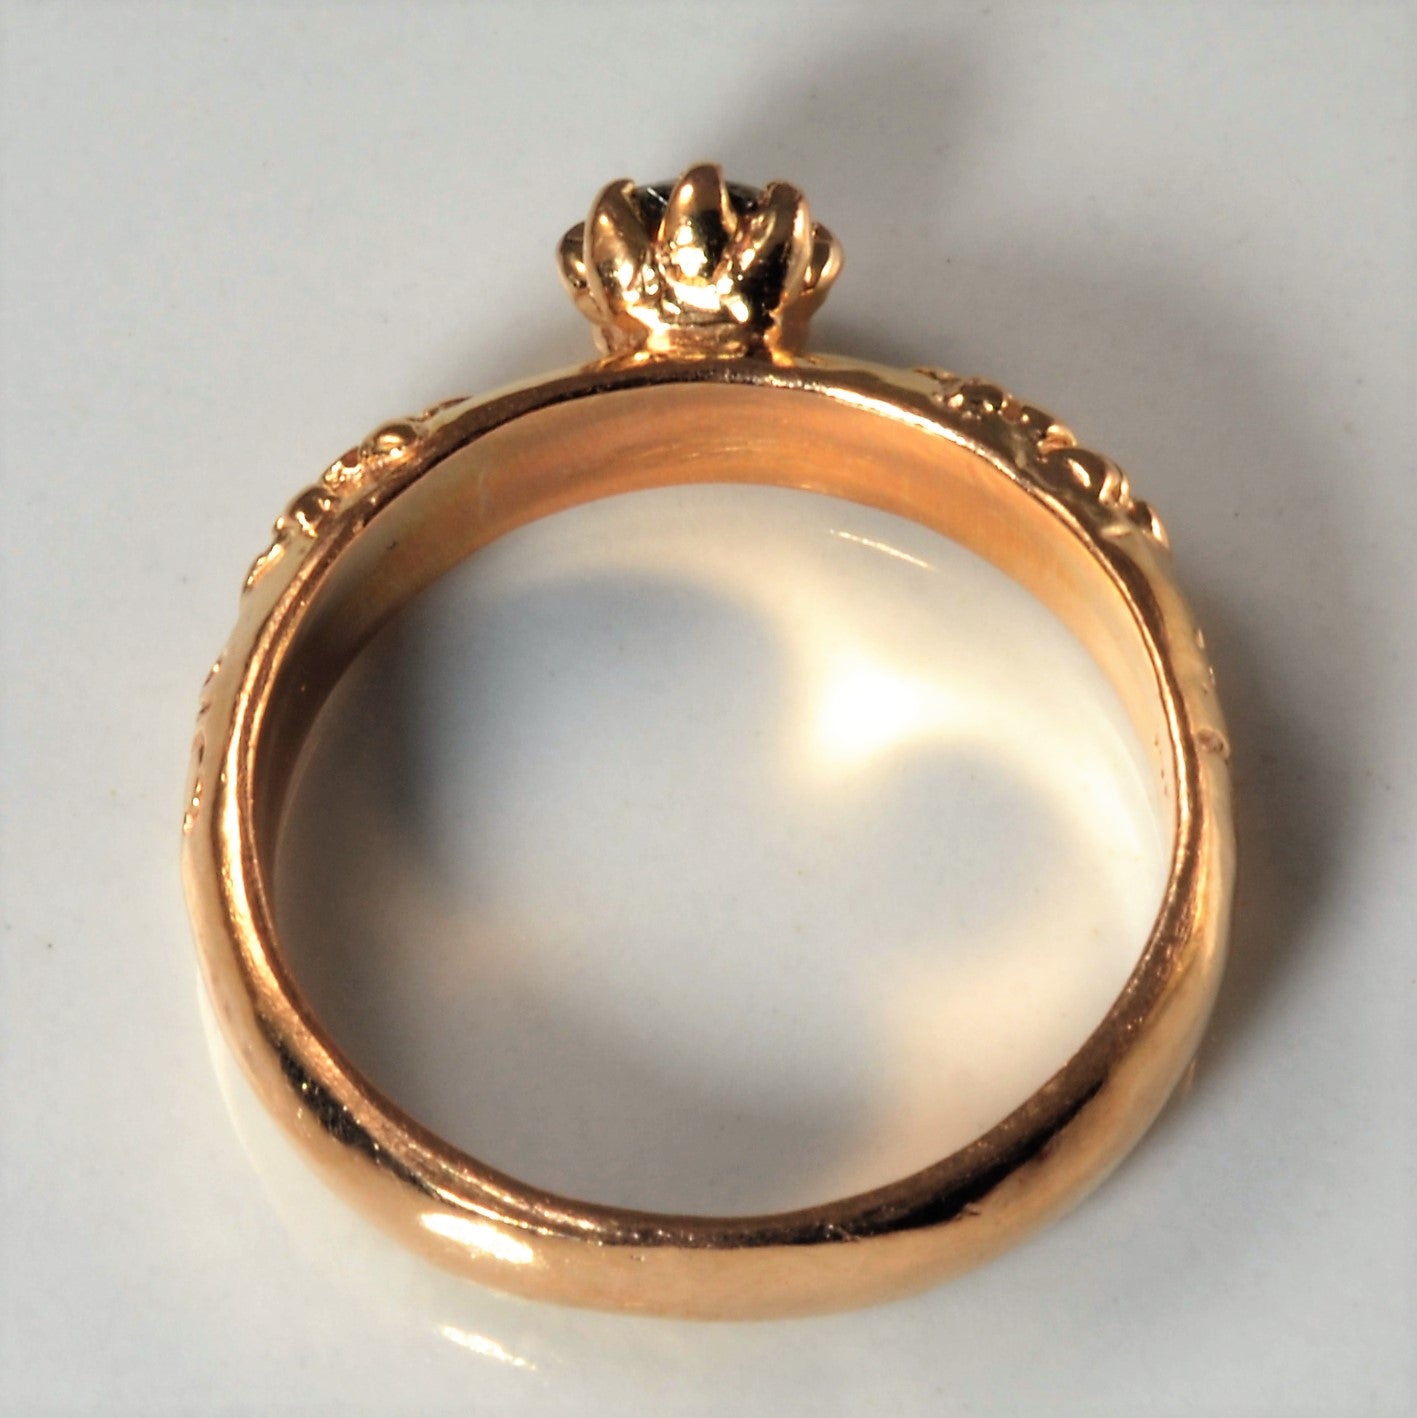 Retro Rose Gold Diamond Ring | 0.31ctw | SZ 6.5 |